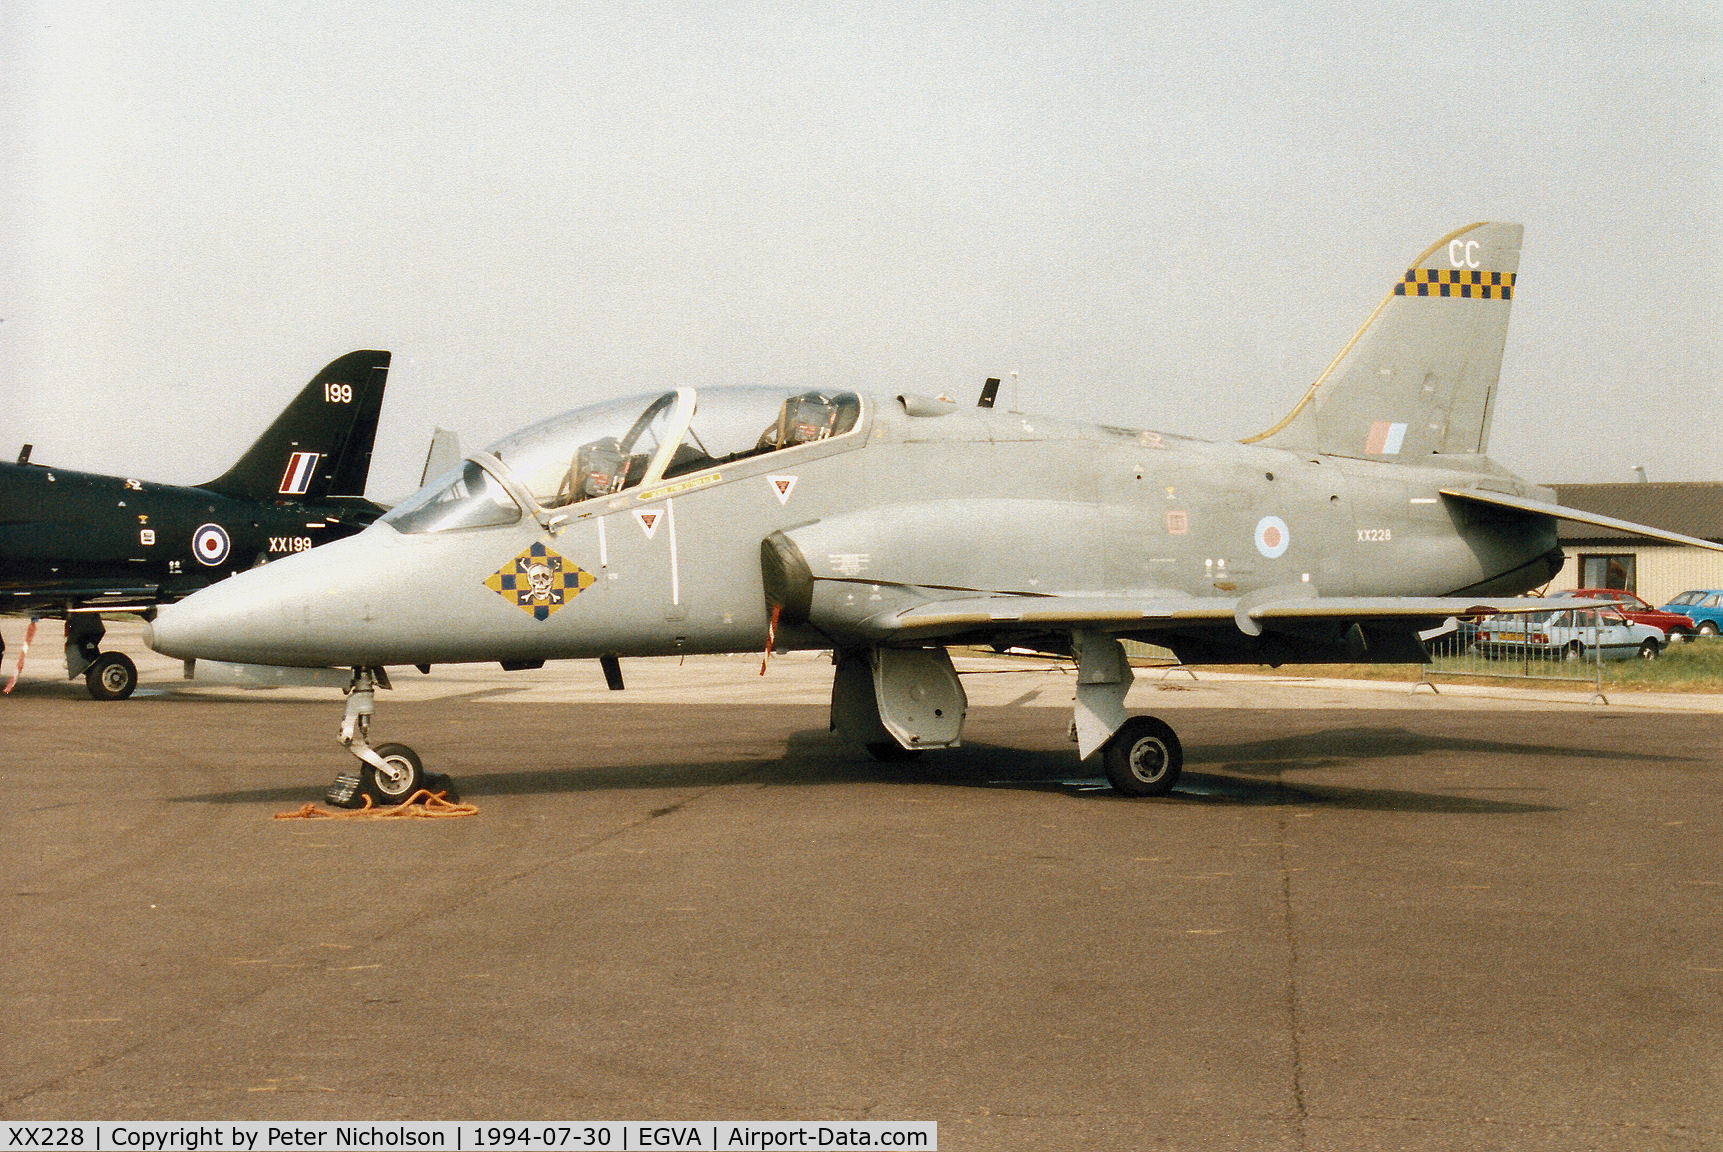 XX228, 1978 Hawker Siddeley Hawk T.1 C/N 064/312064, Hawk T.1A of 100 Squadron at RAF Leeming on display at the 1994 Intnl Air Tattoo at RAF Fairford.